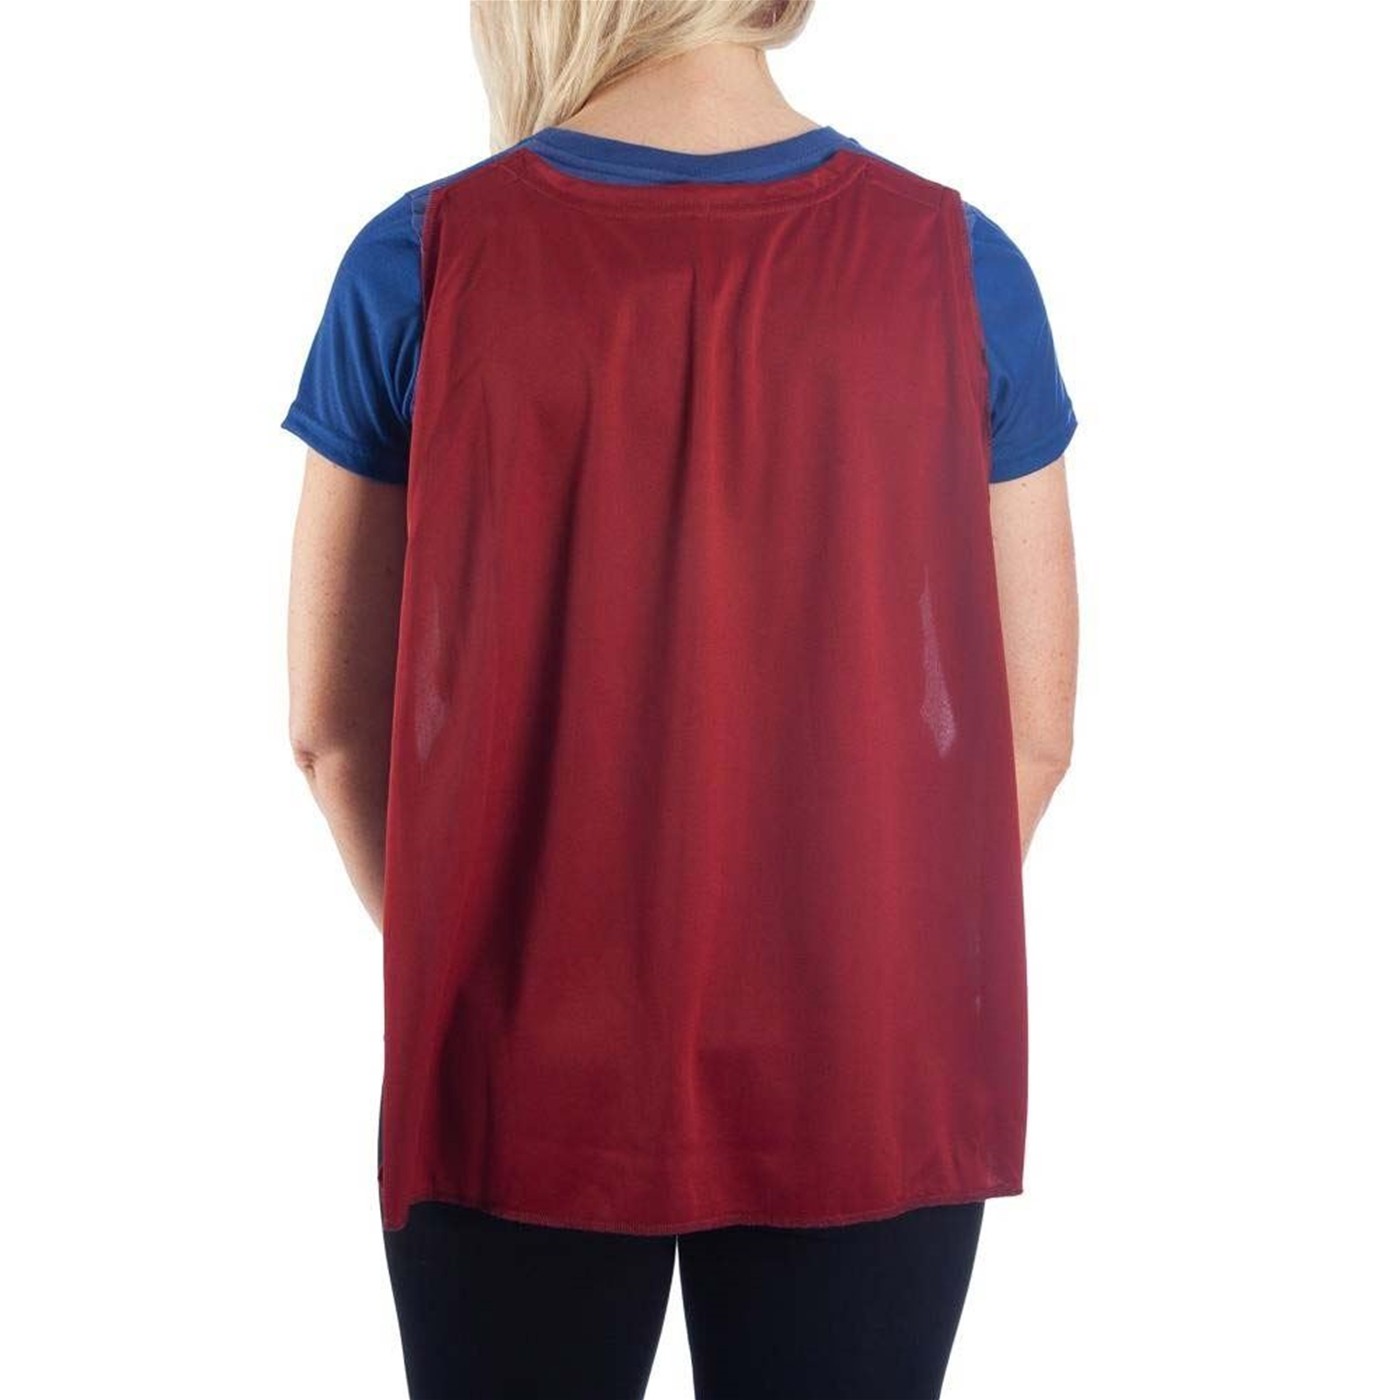 Supergirl Caped Costume Women's T-Shirt